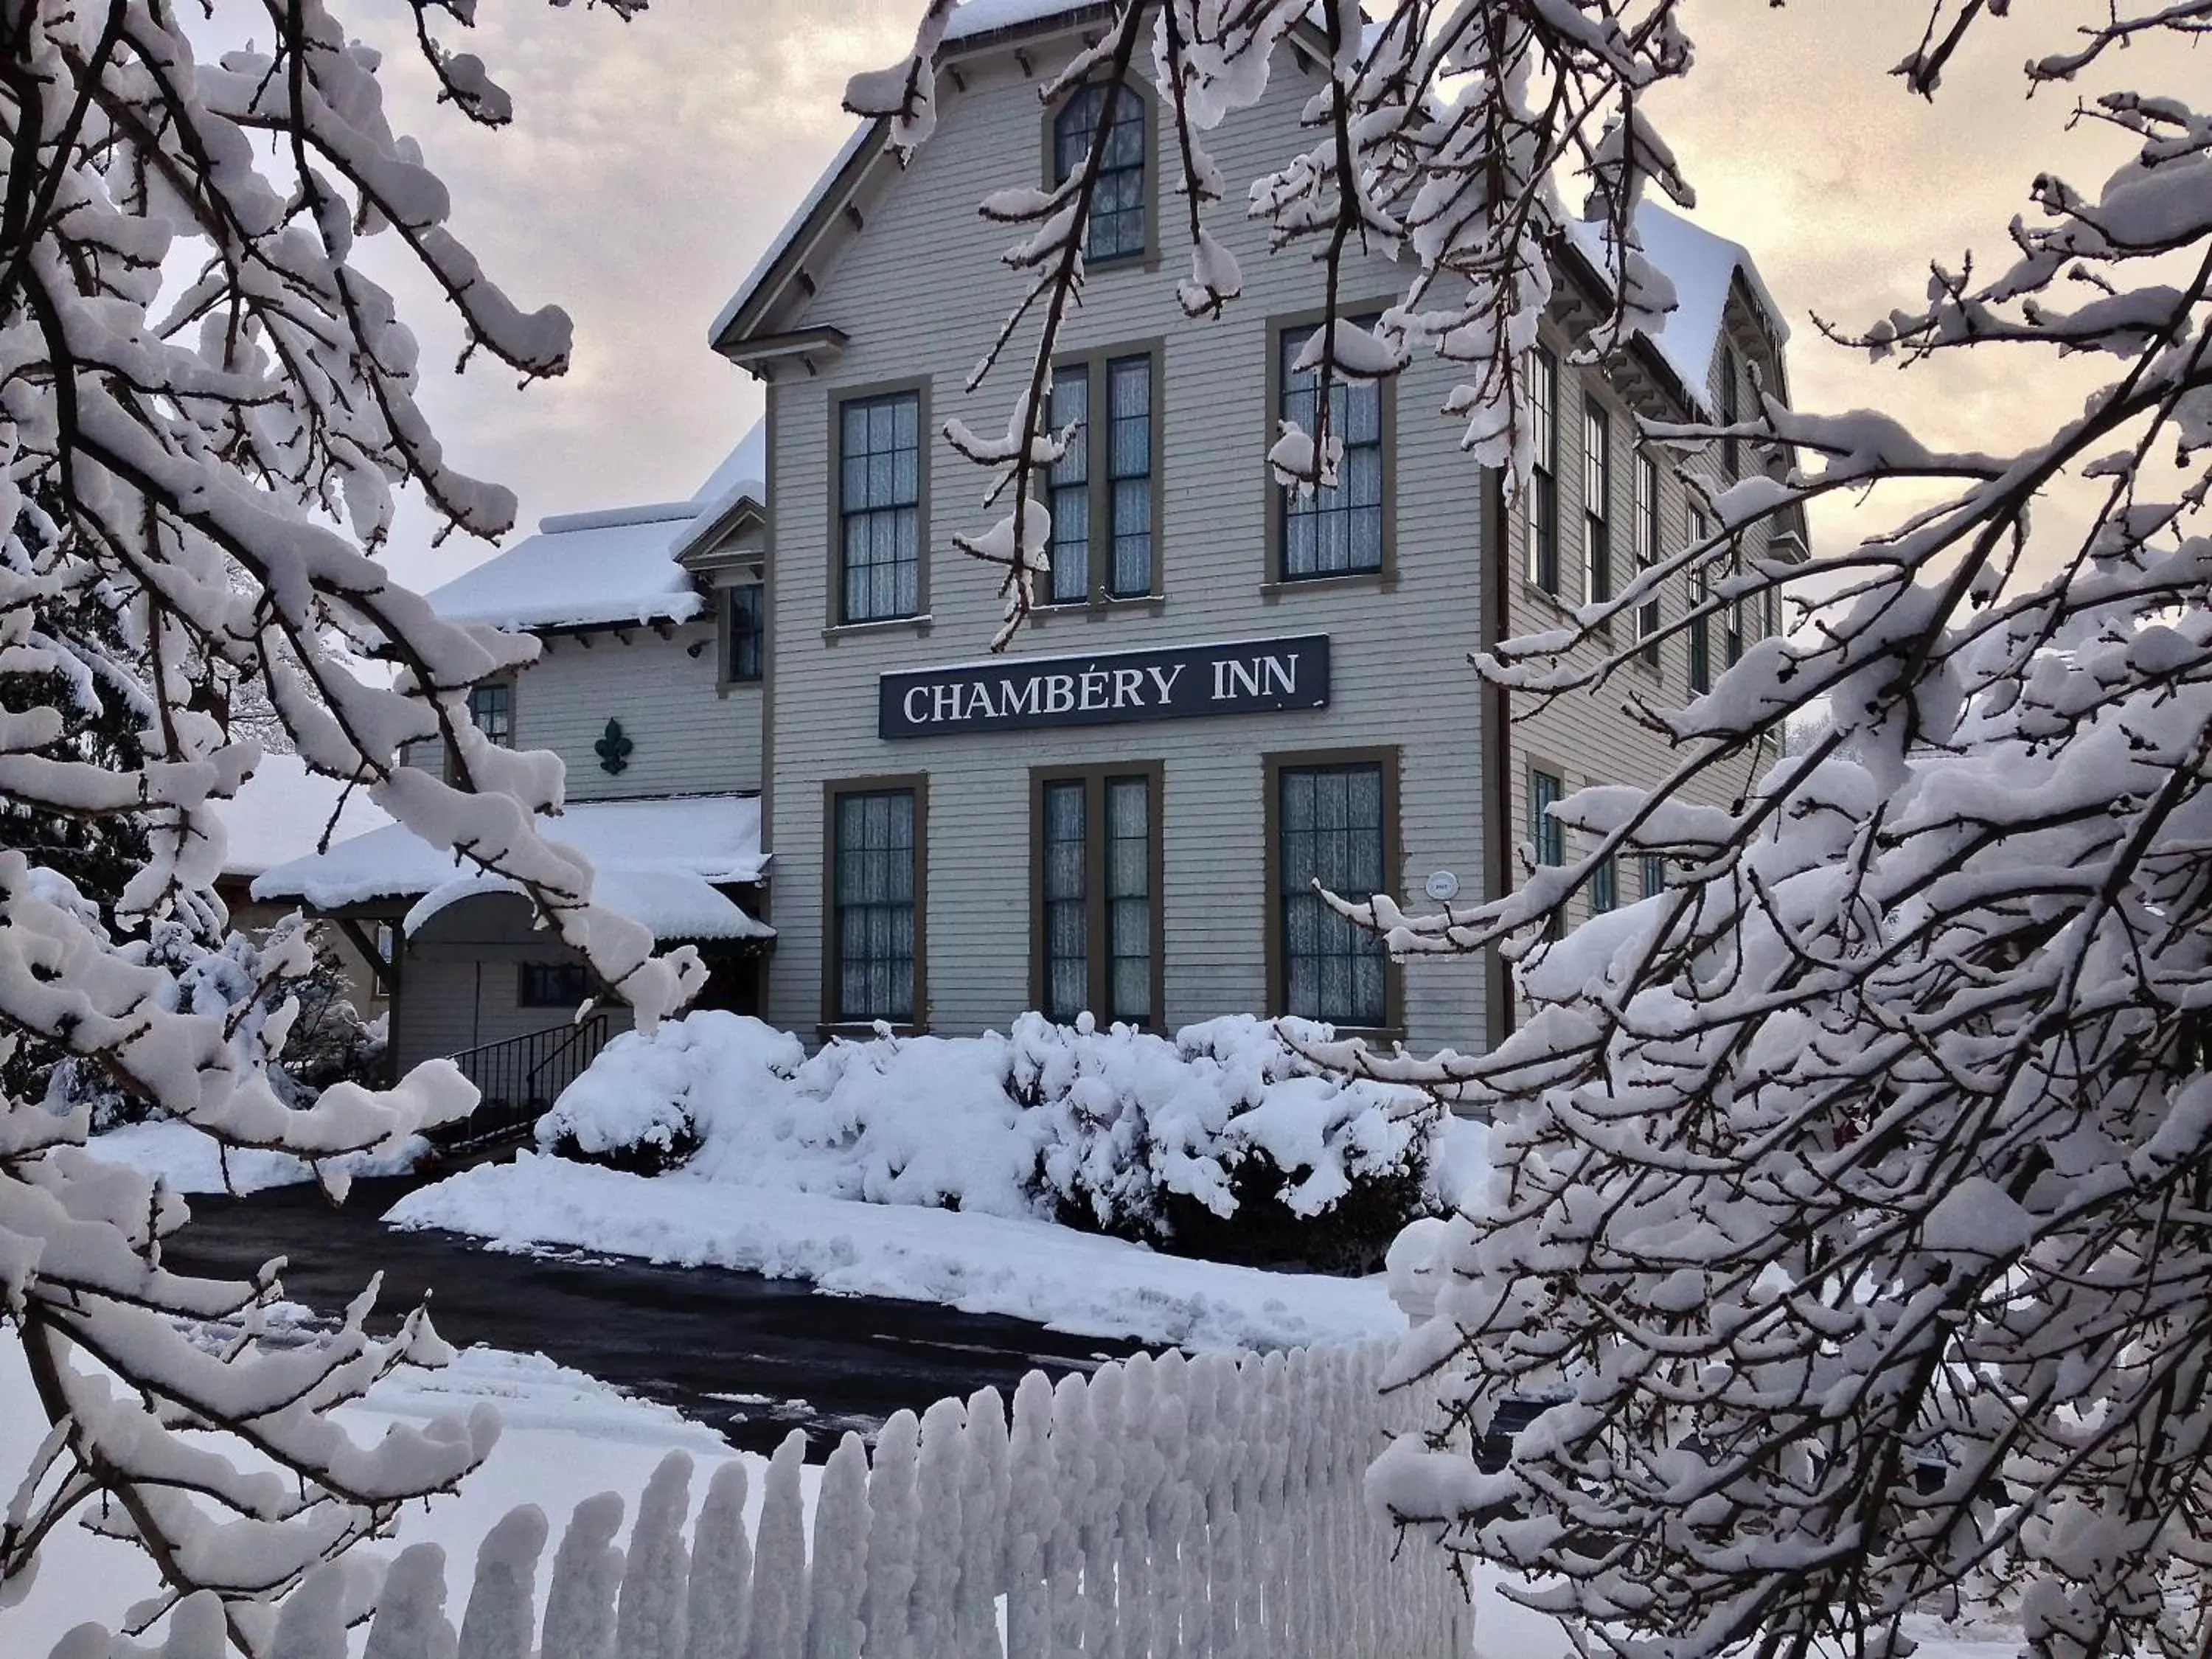 Property building, Winter in Chambery Inn